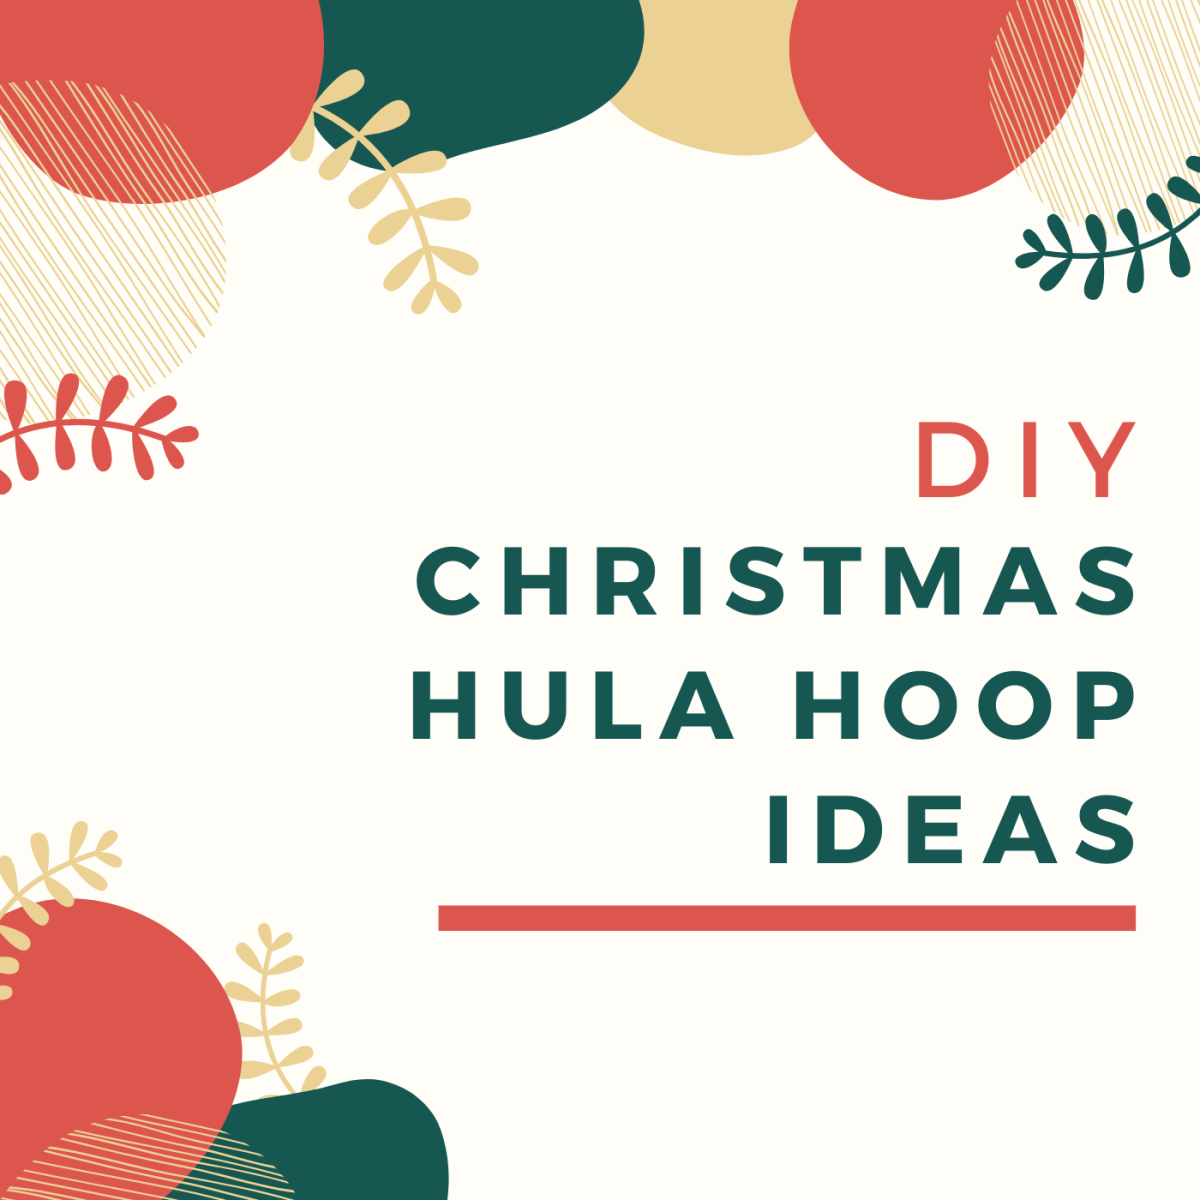 50+ DIY Christmas Hula Hoop Decoration Ideas to Make Your Home Sparkle